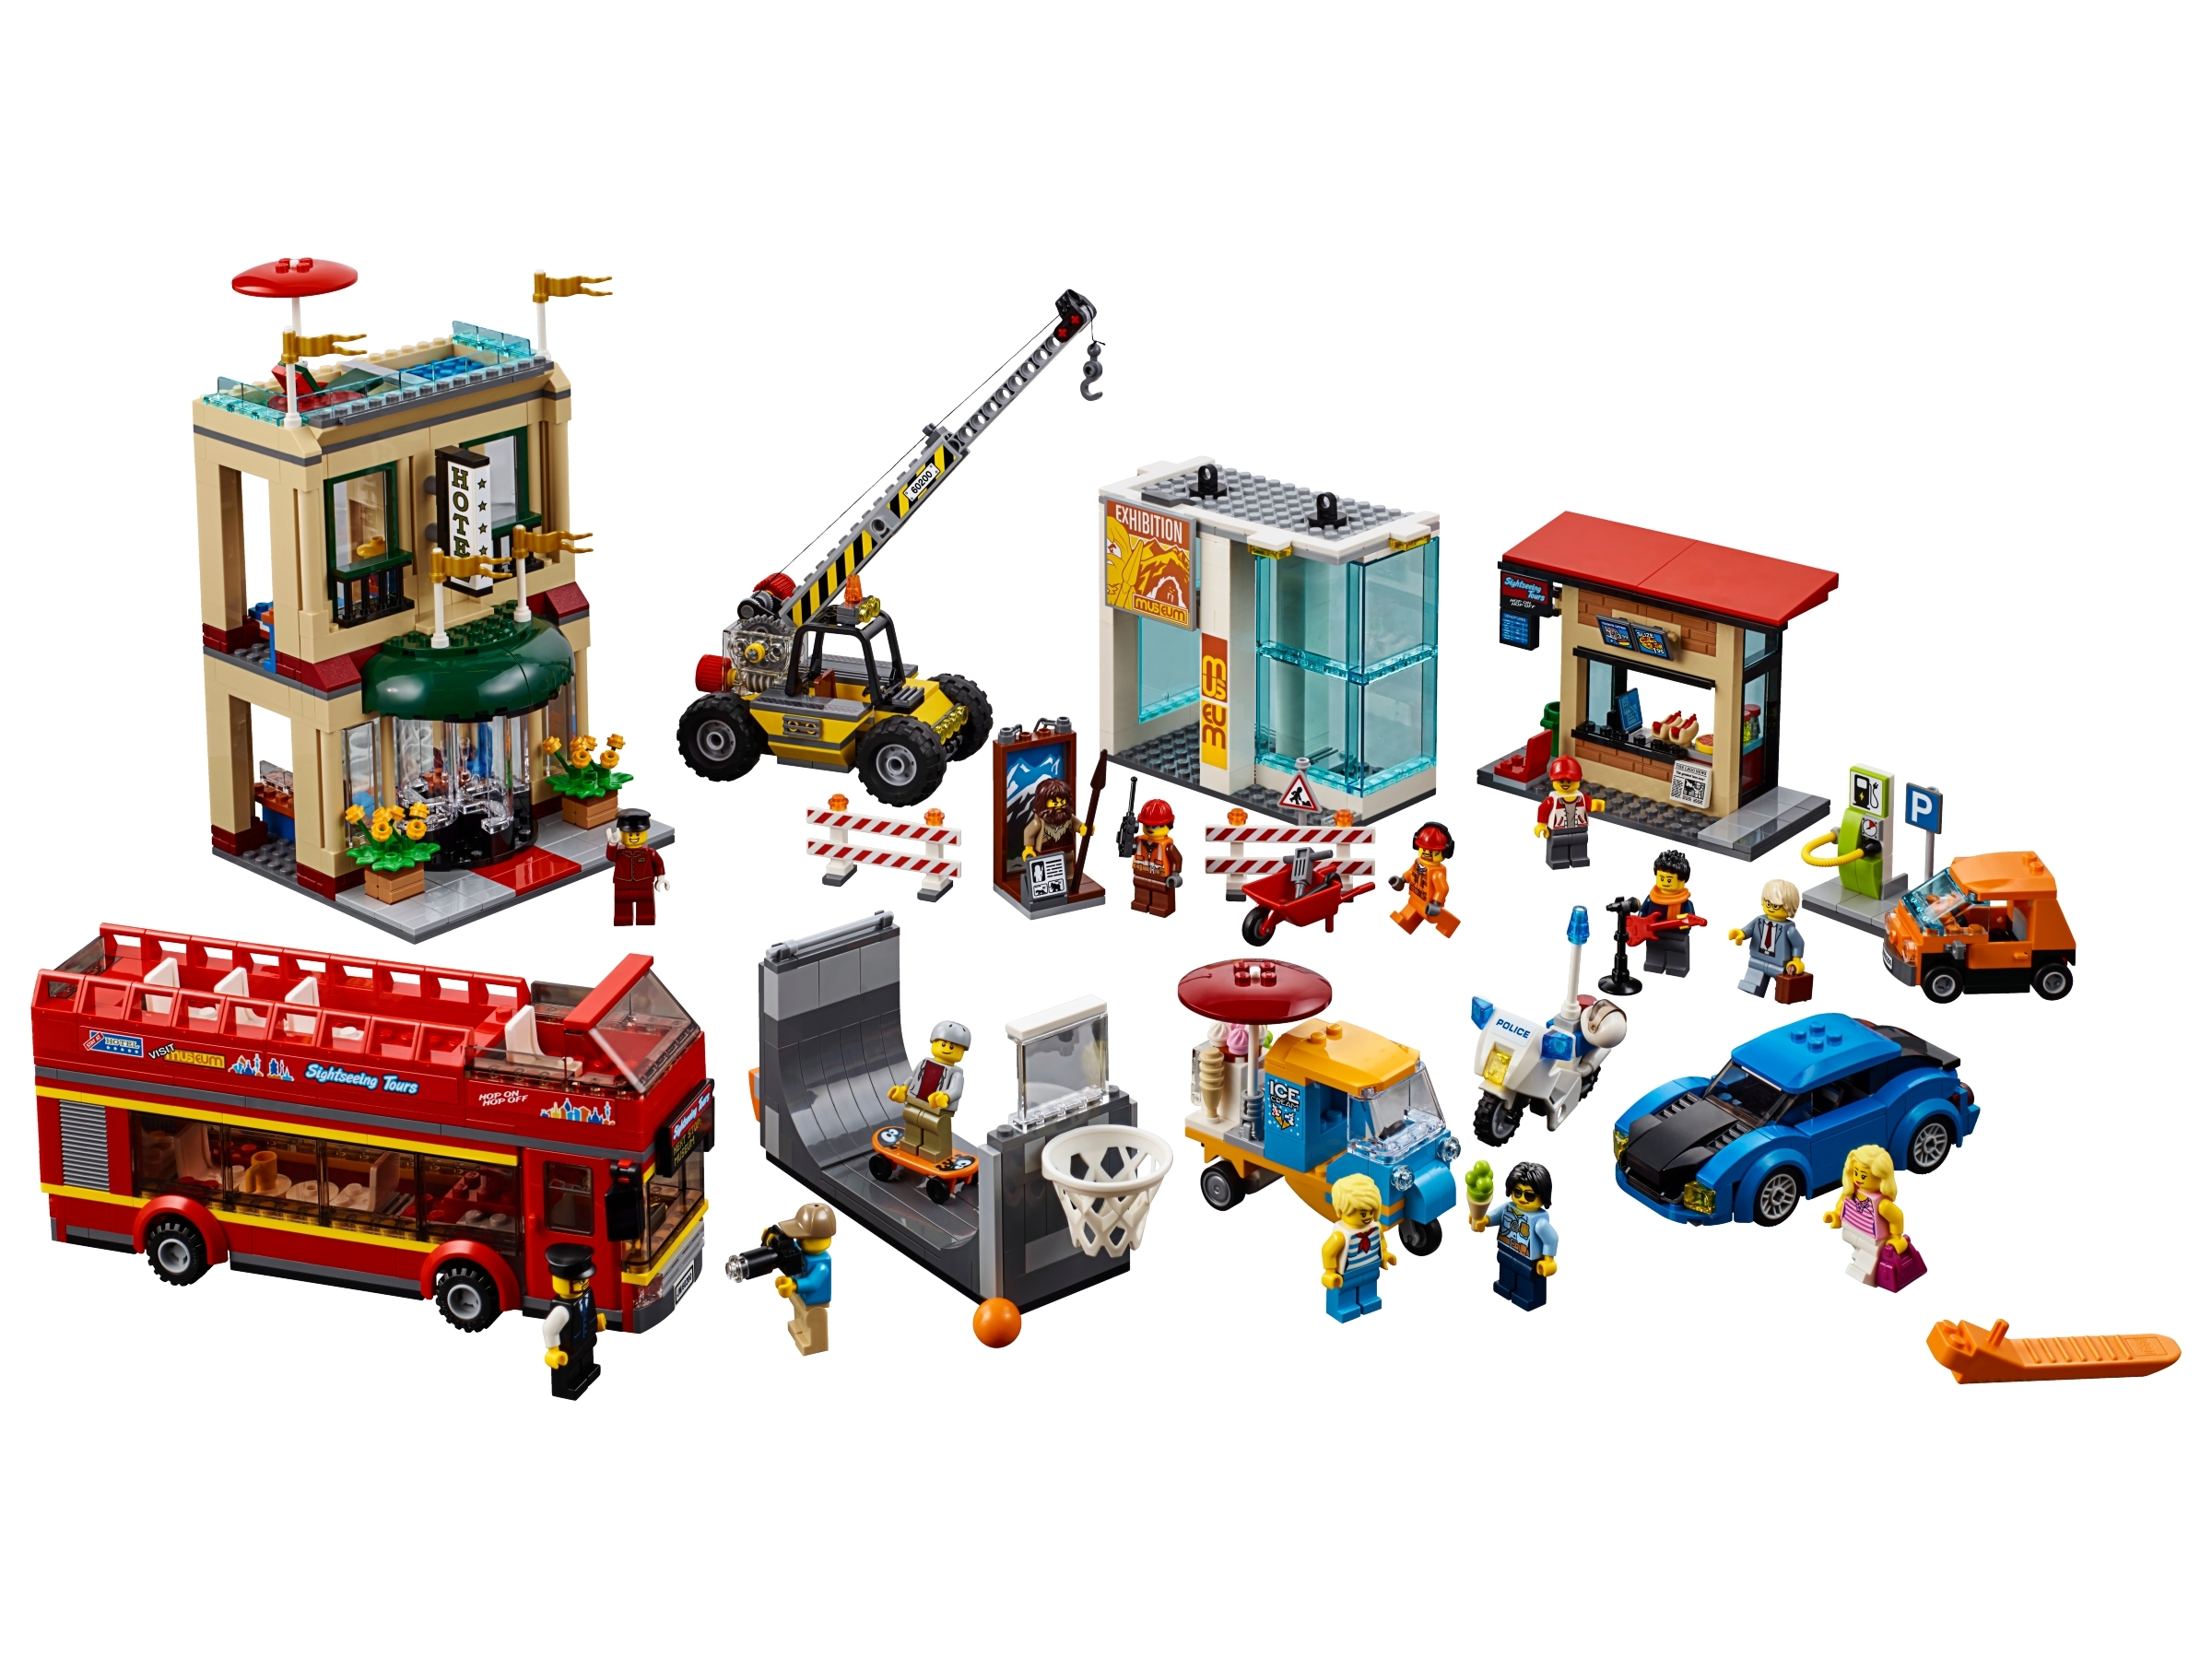 LEGO City: City Square (60097) Toys - Zavvi US